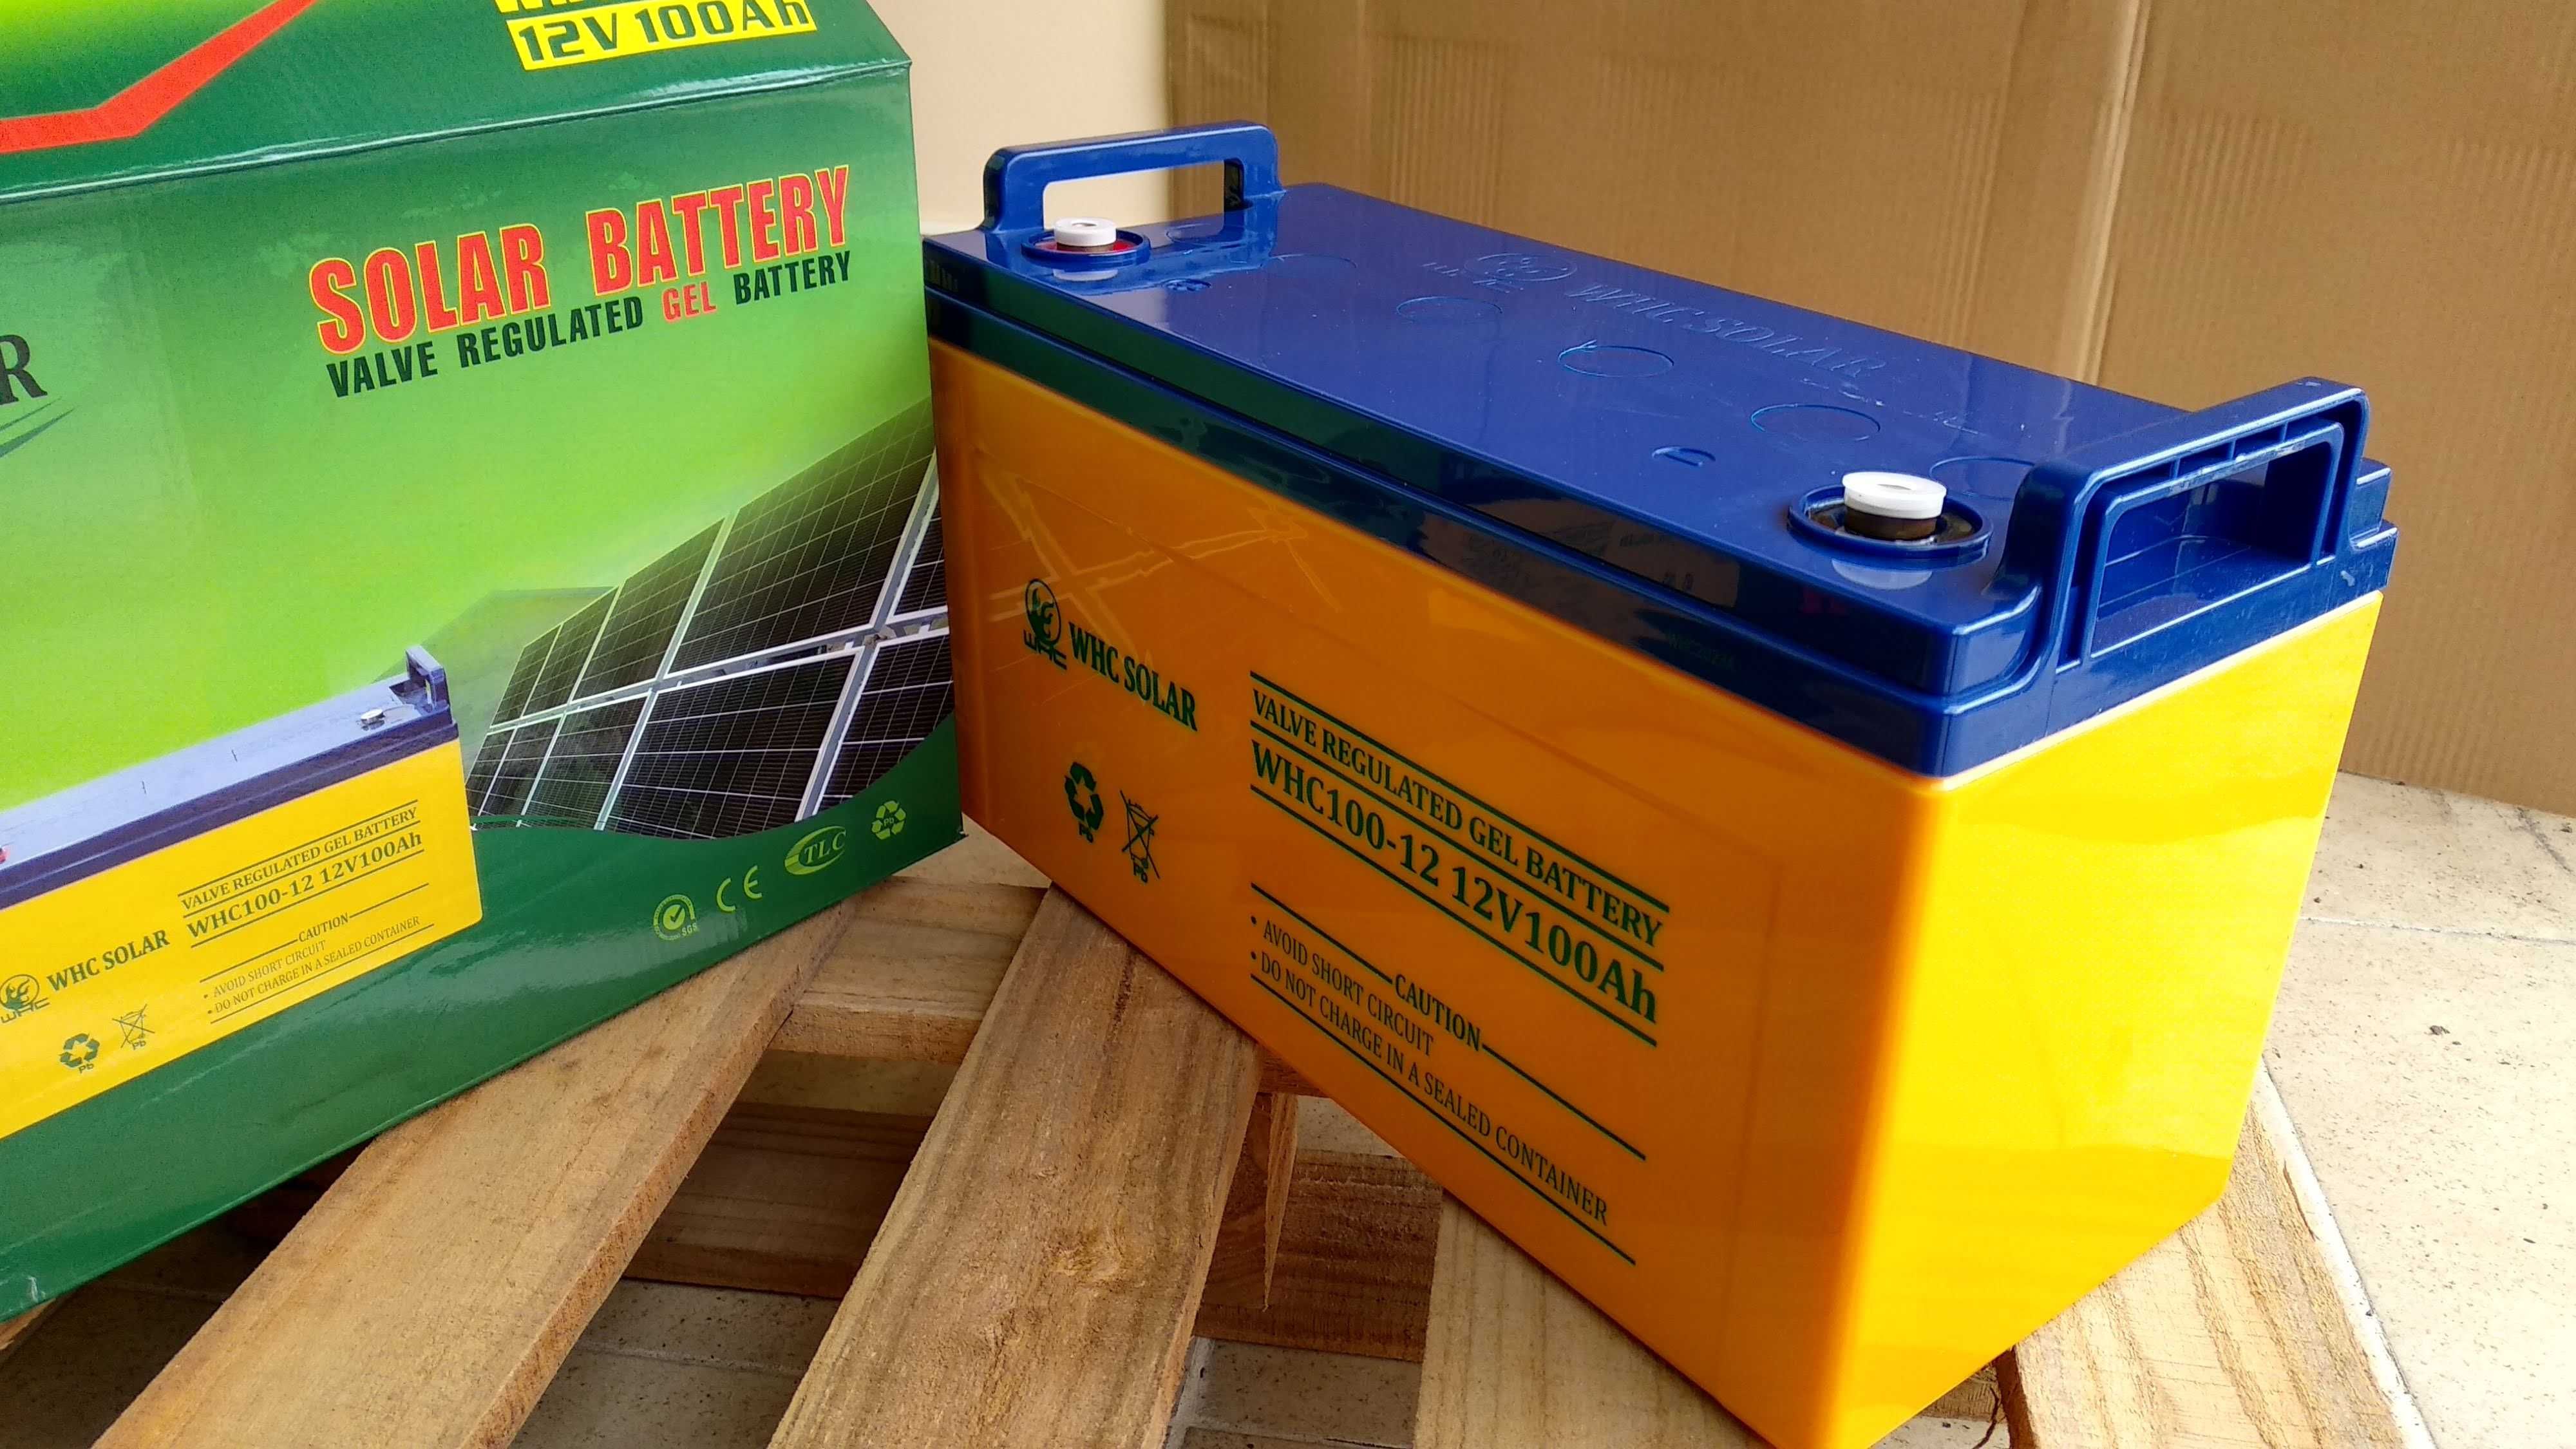 WHC Solar Gel battery 12V 120Ah Гелевий стартовий акумулятор ИБП